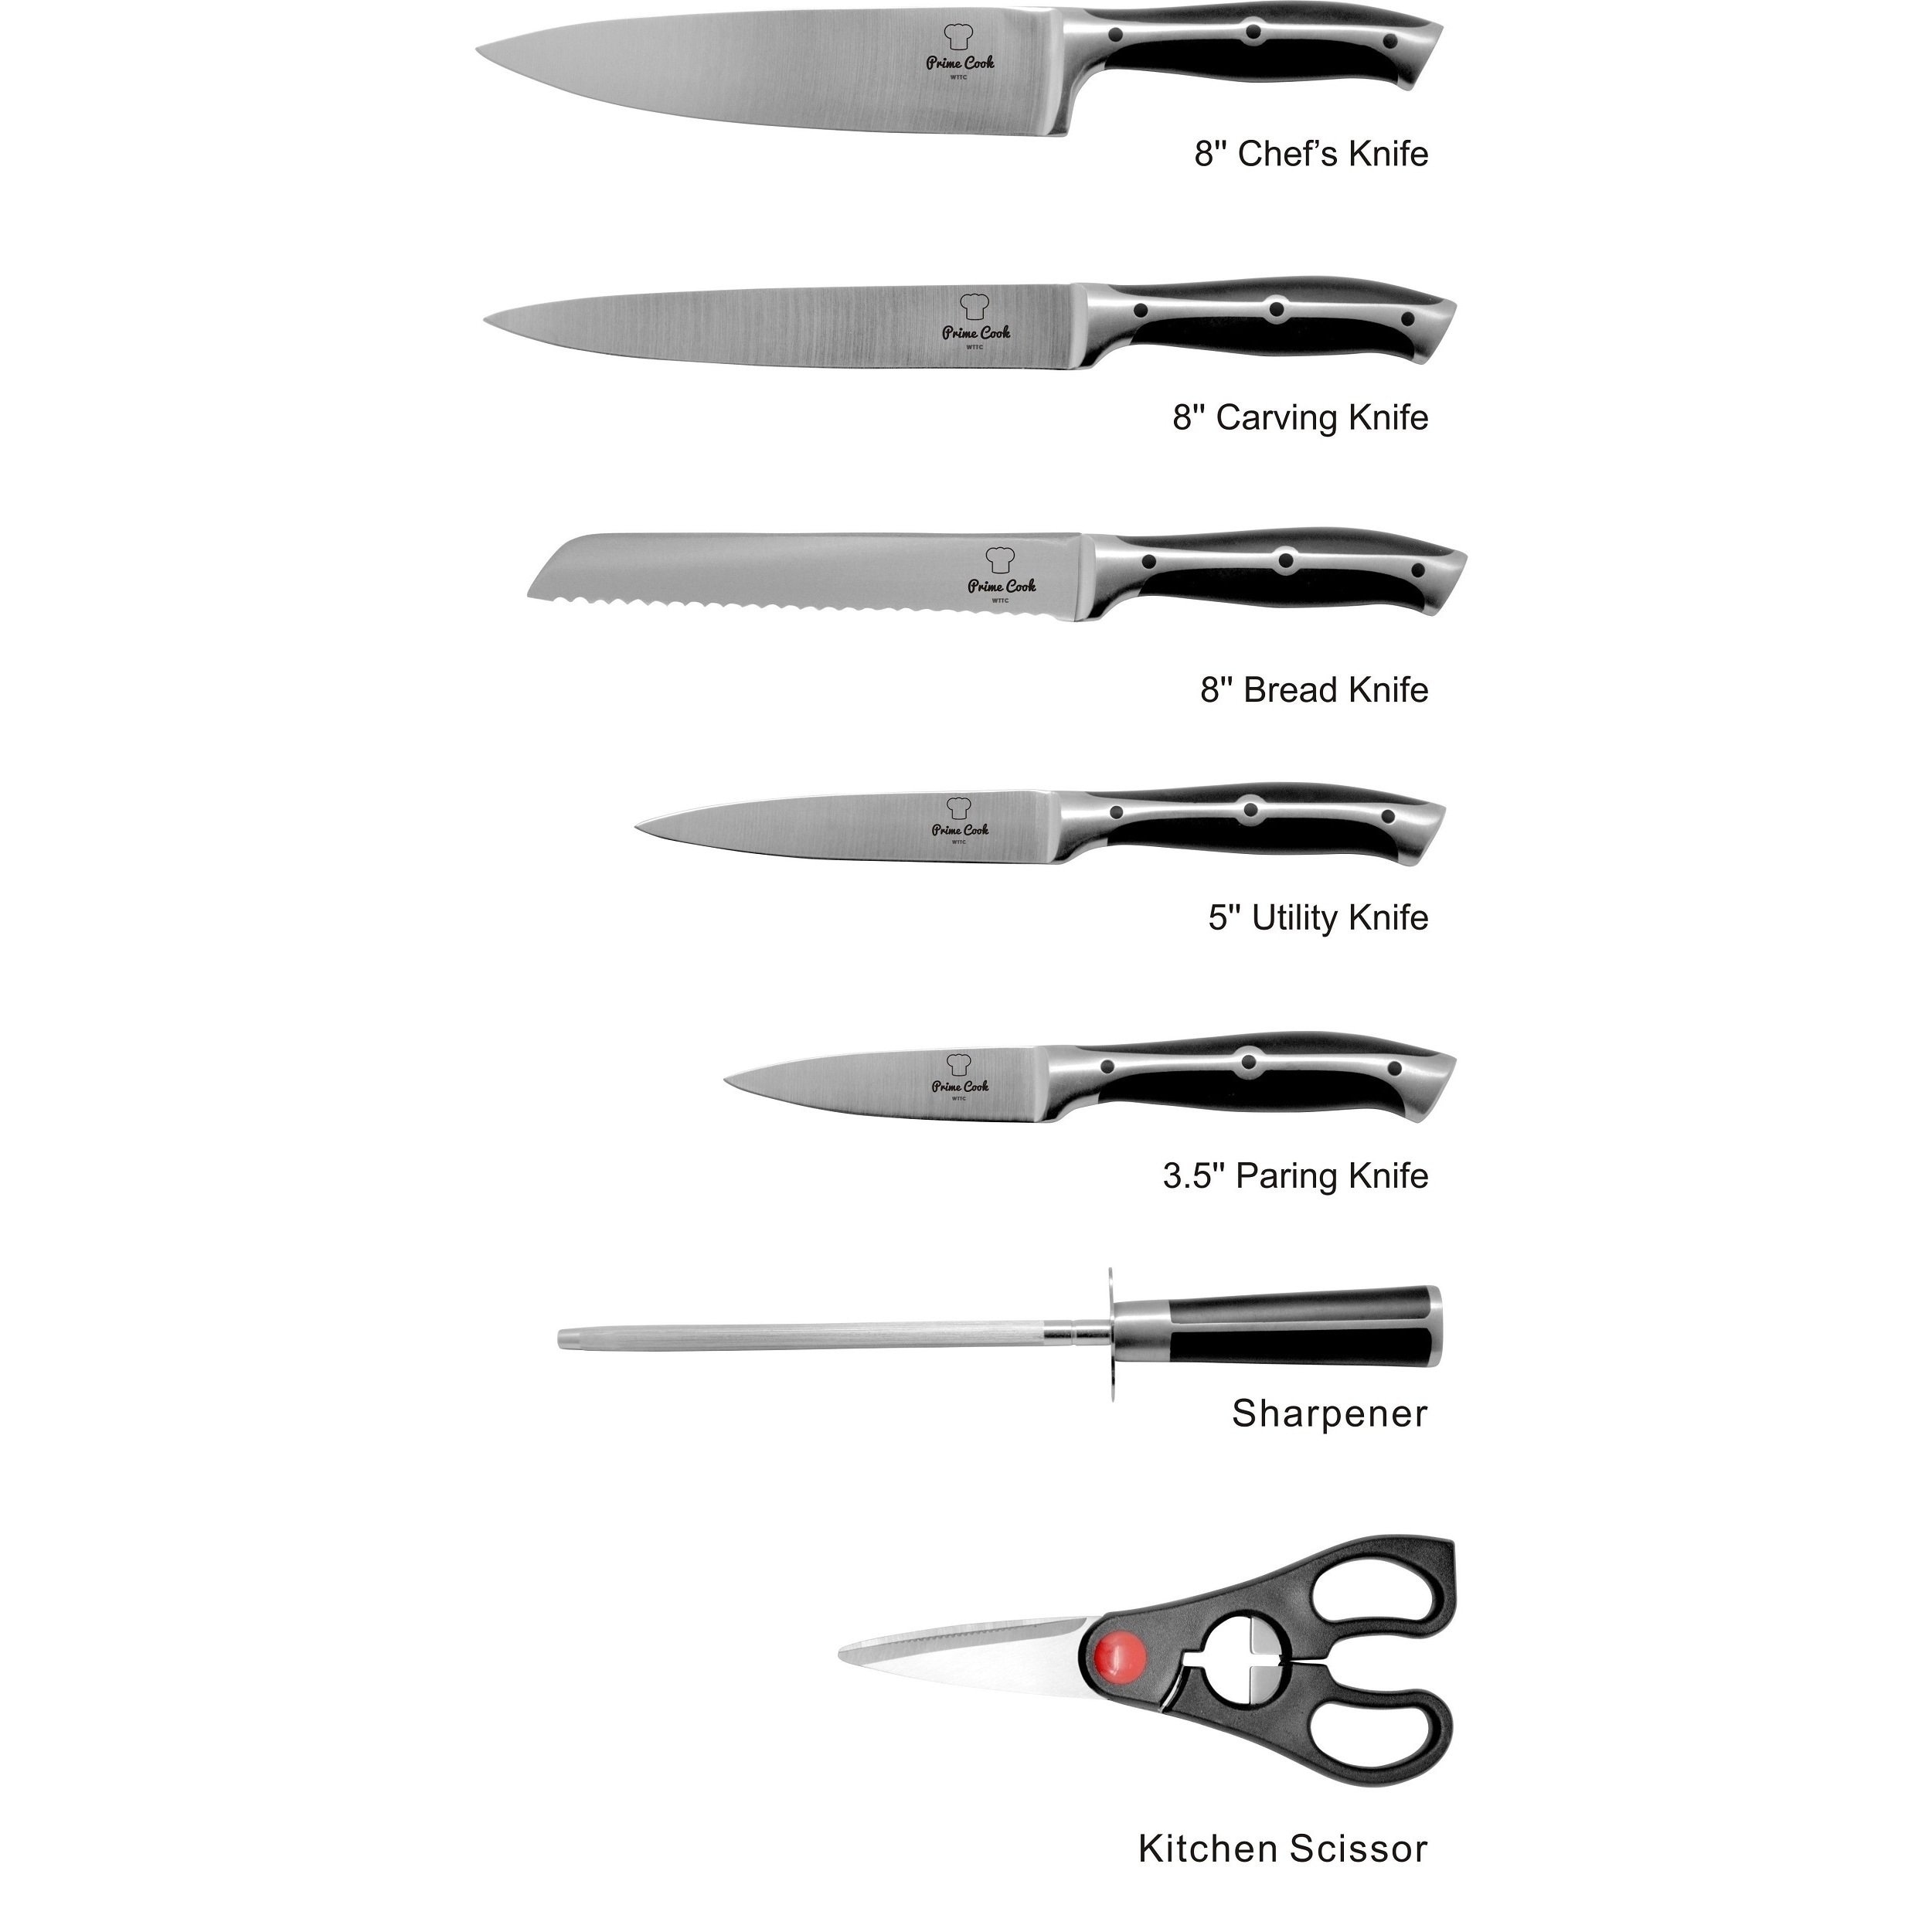 https://ak1.ostkcdn.com/images/products/12647088/Prime-Cook-Stainless-Steel-8-piece-Knife-Set-da352d1e-b907-4a07-a3c8-d48e616281dc.jpg